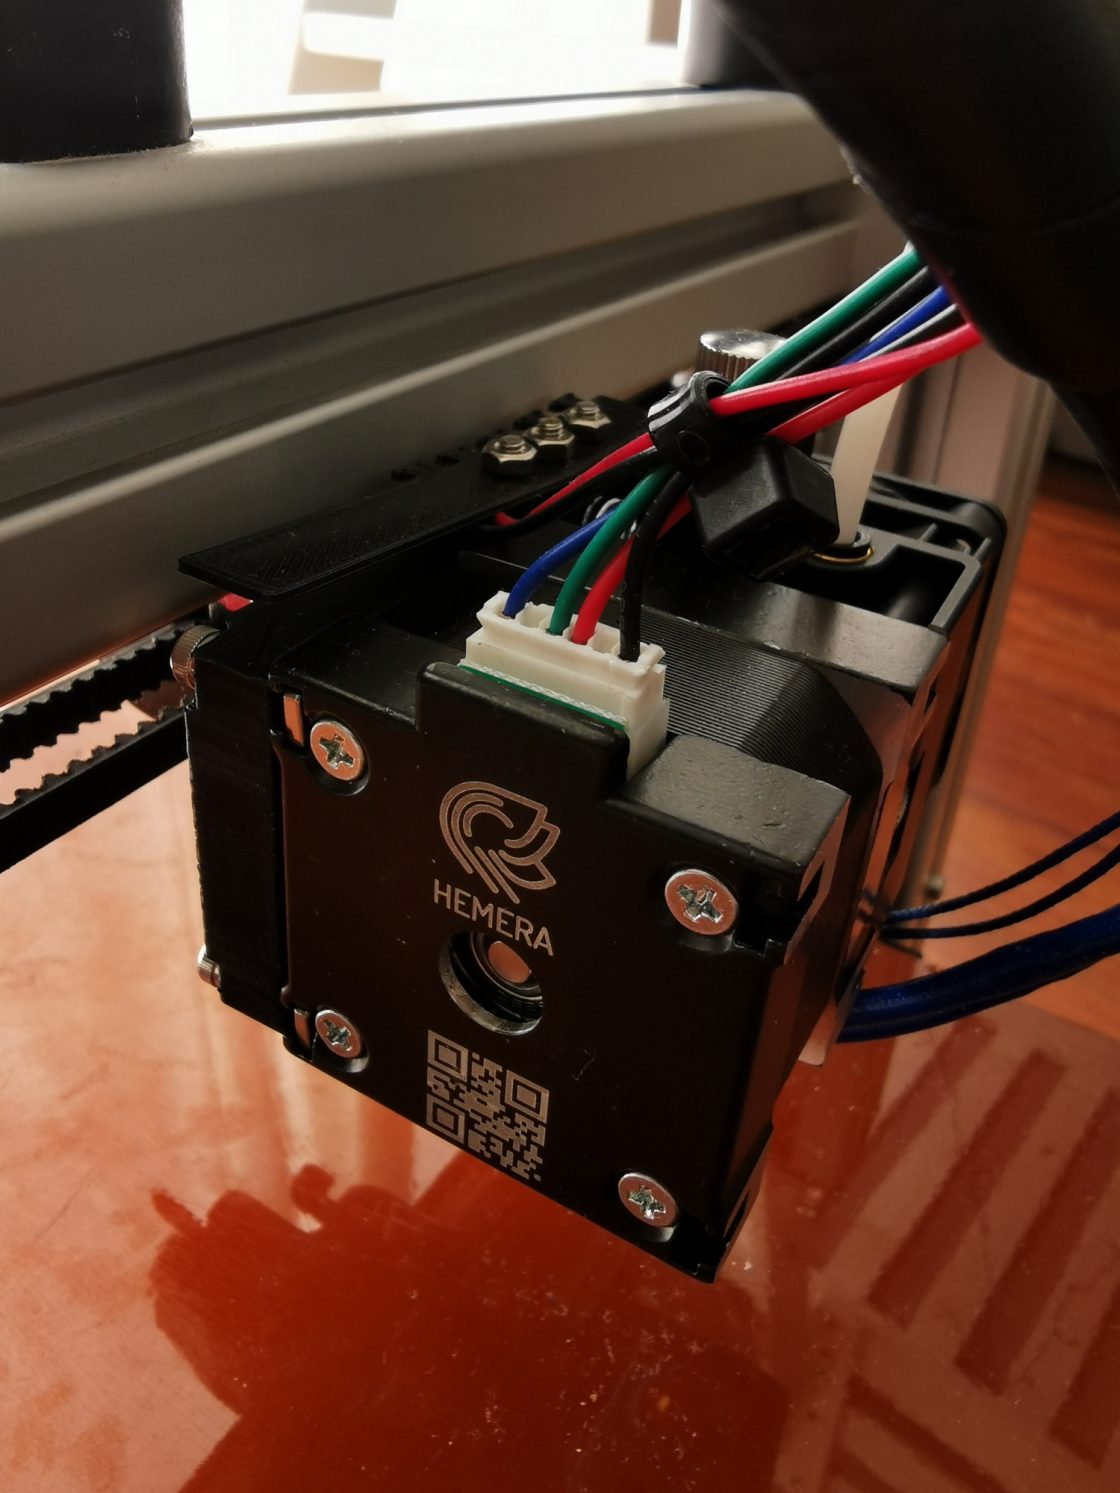 de E3D hemera gemount aan de Felix 3D printer